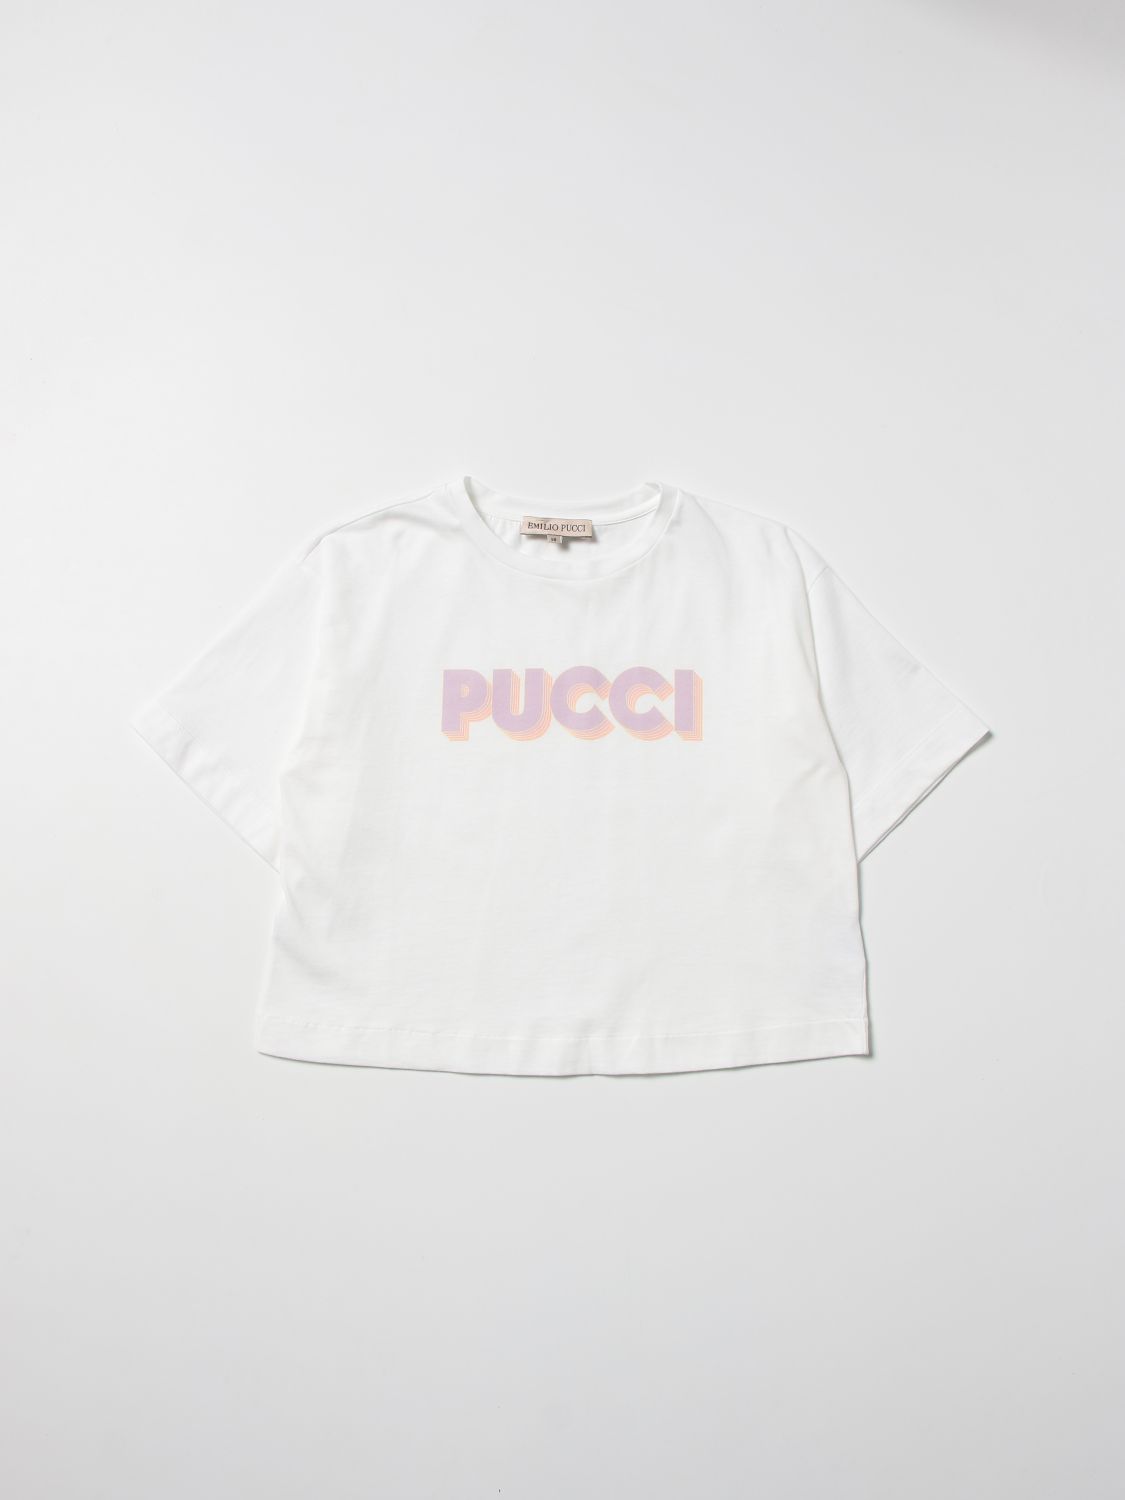 Emilio Pucci logo T-shirt